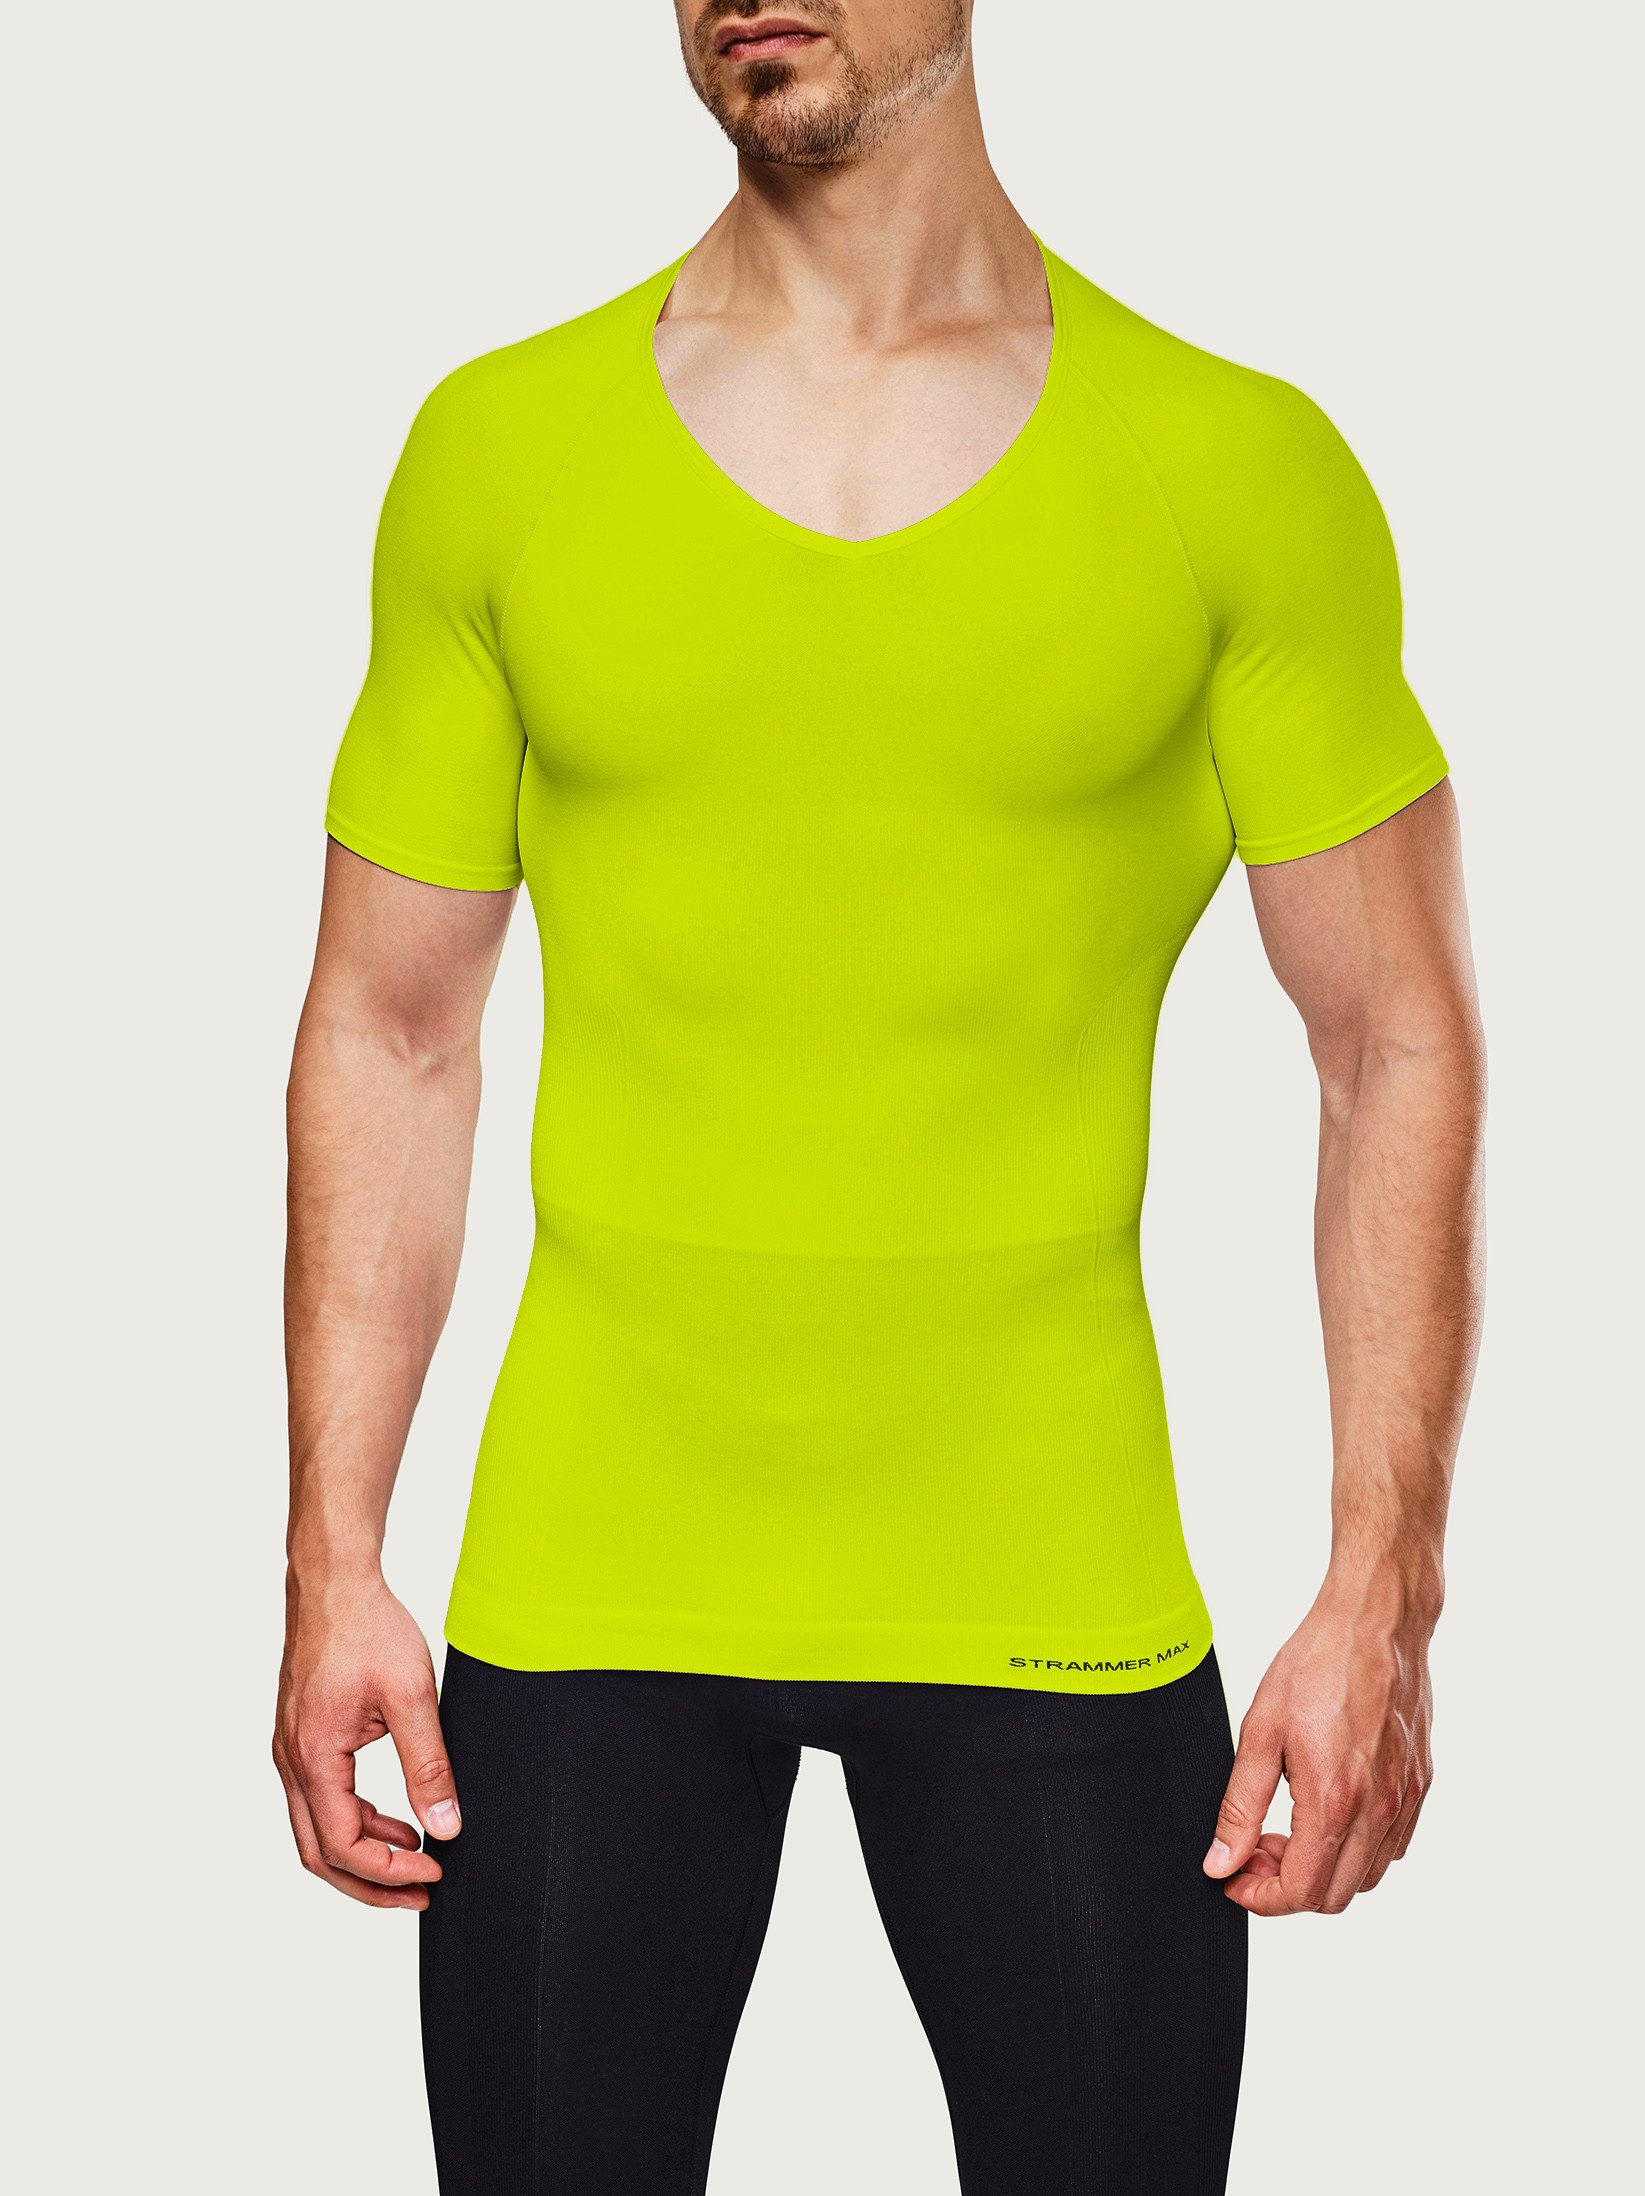 Strammer Max Performance® Kompressionsshirt Deep V-Neck Shirt Breeze mit Kompression Shapewear, kühlendes High Tech Gewebe